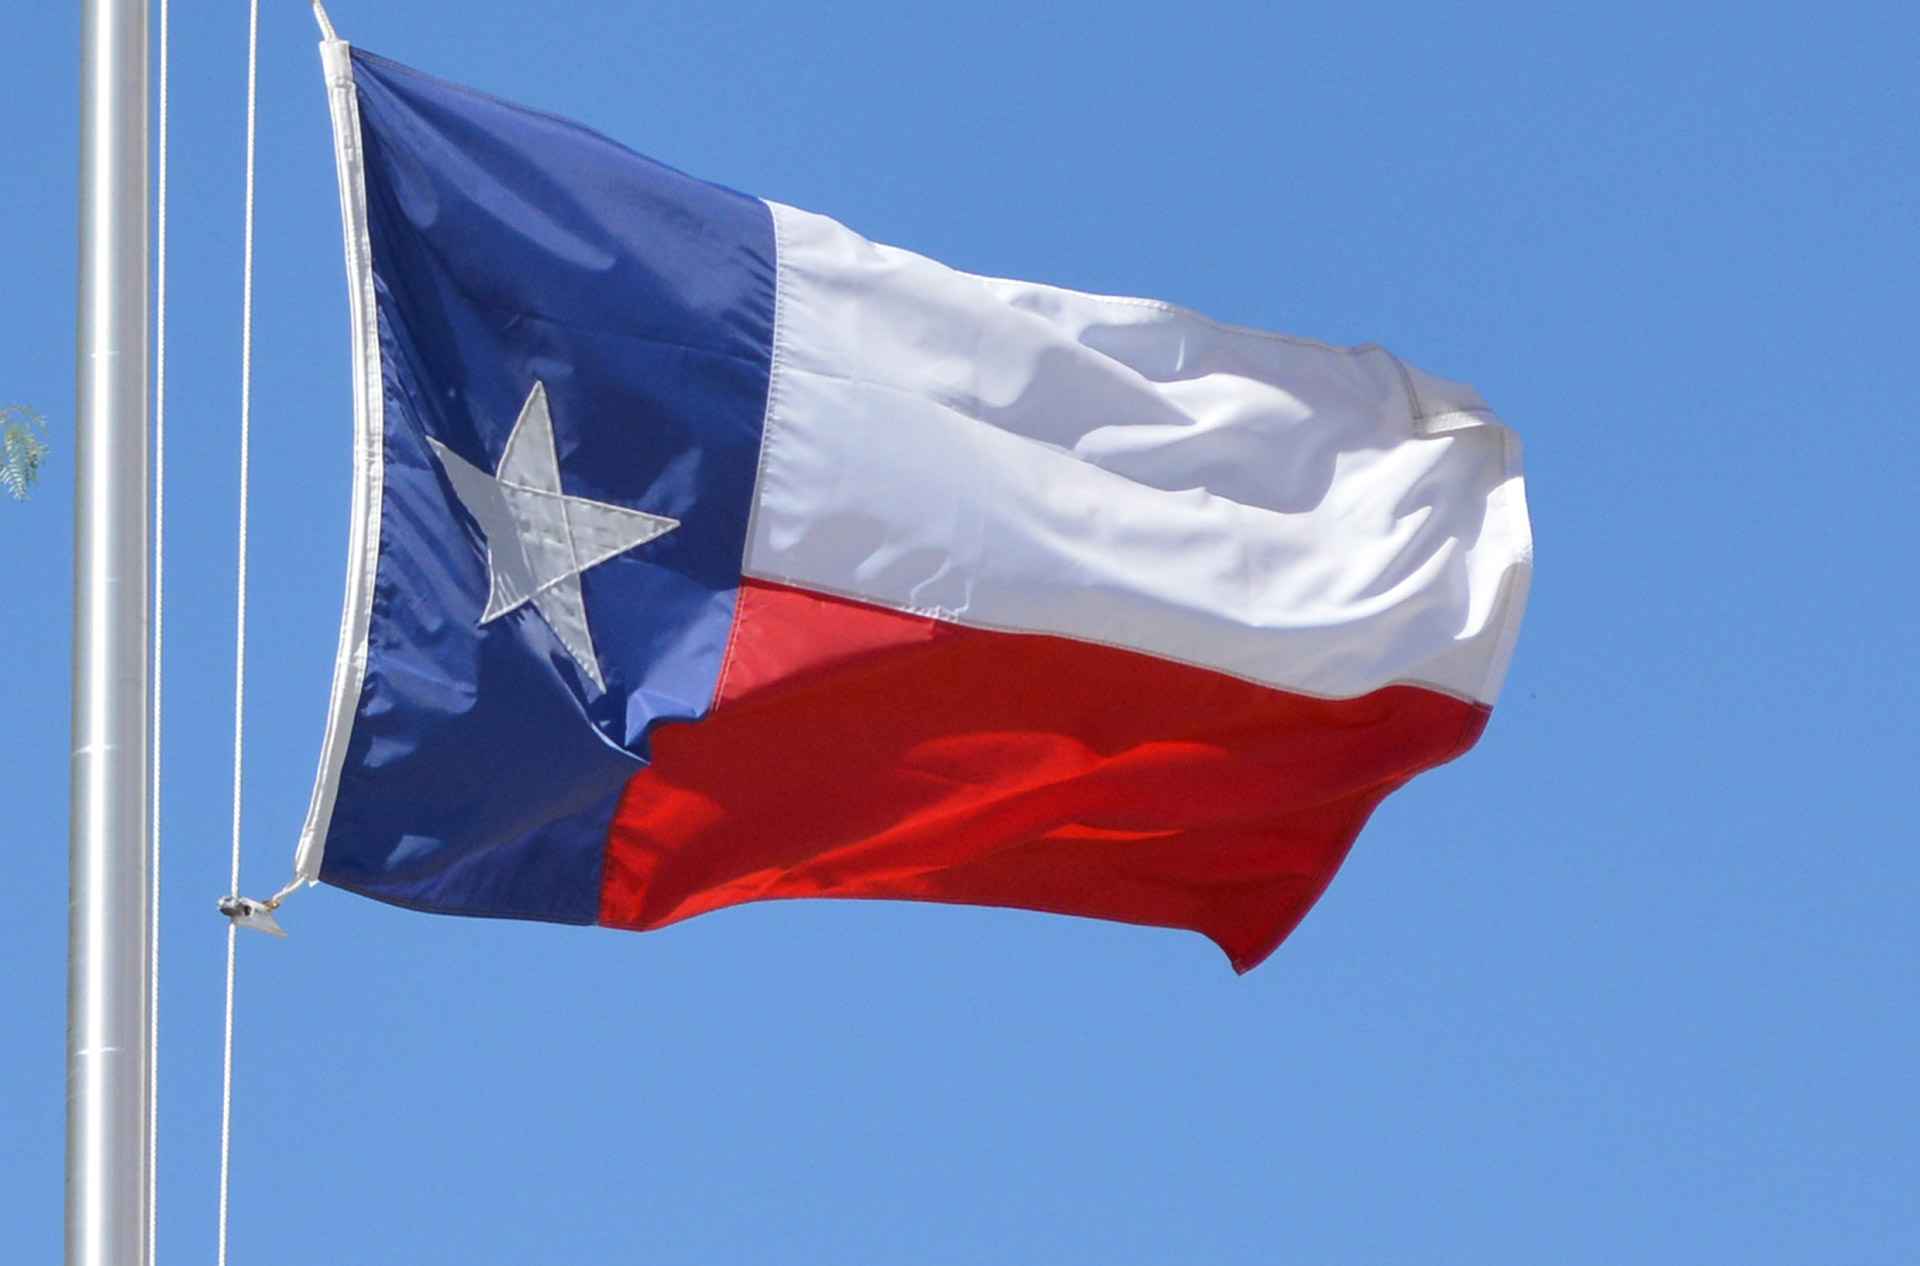 Election legislation roundup: Texas State Legislature